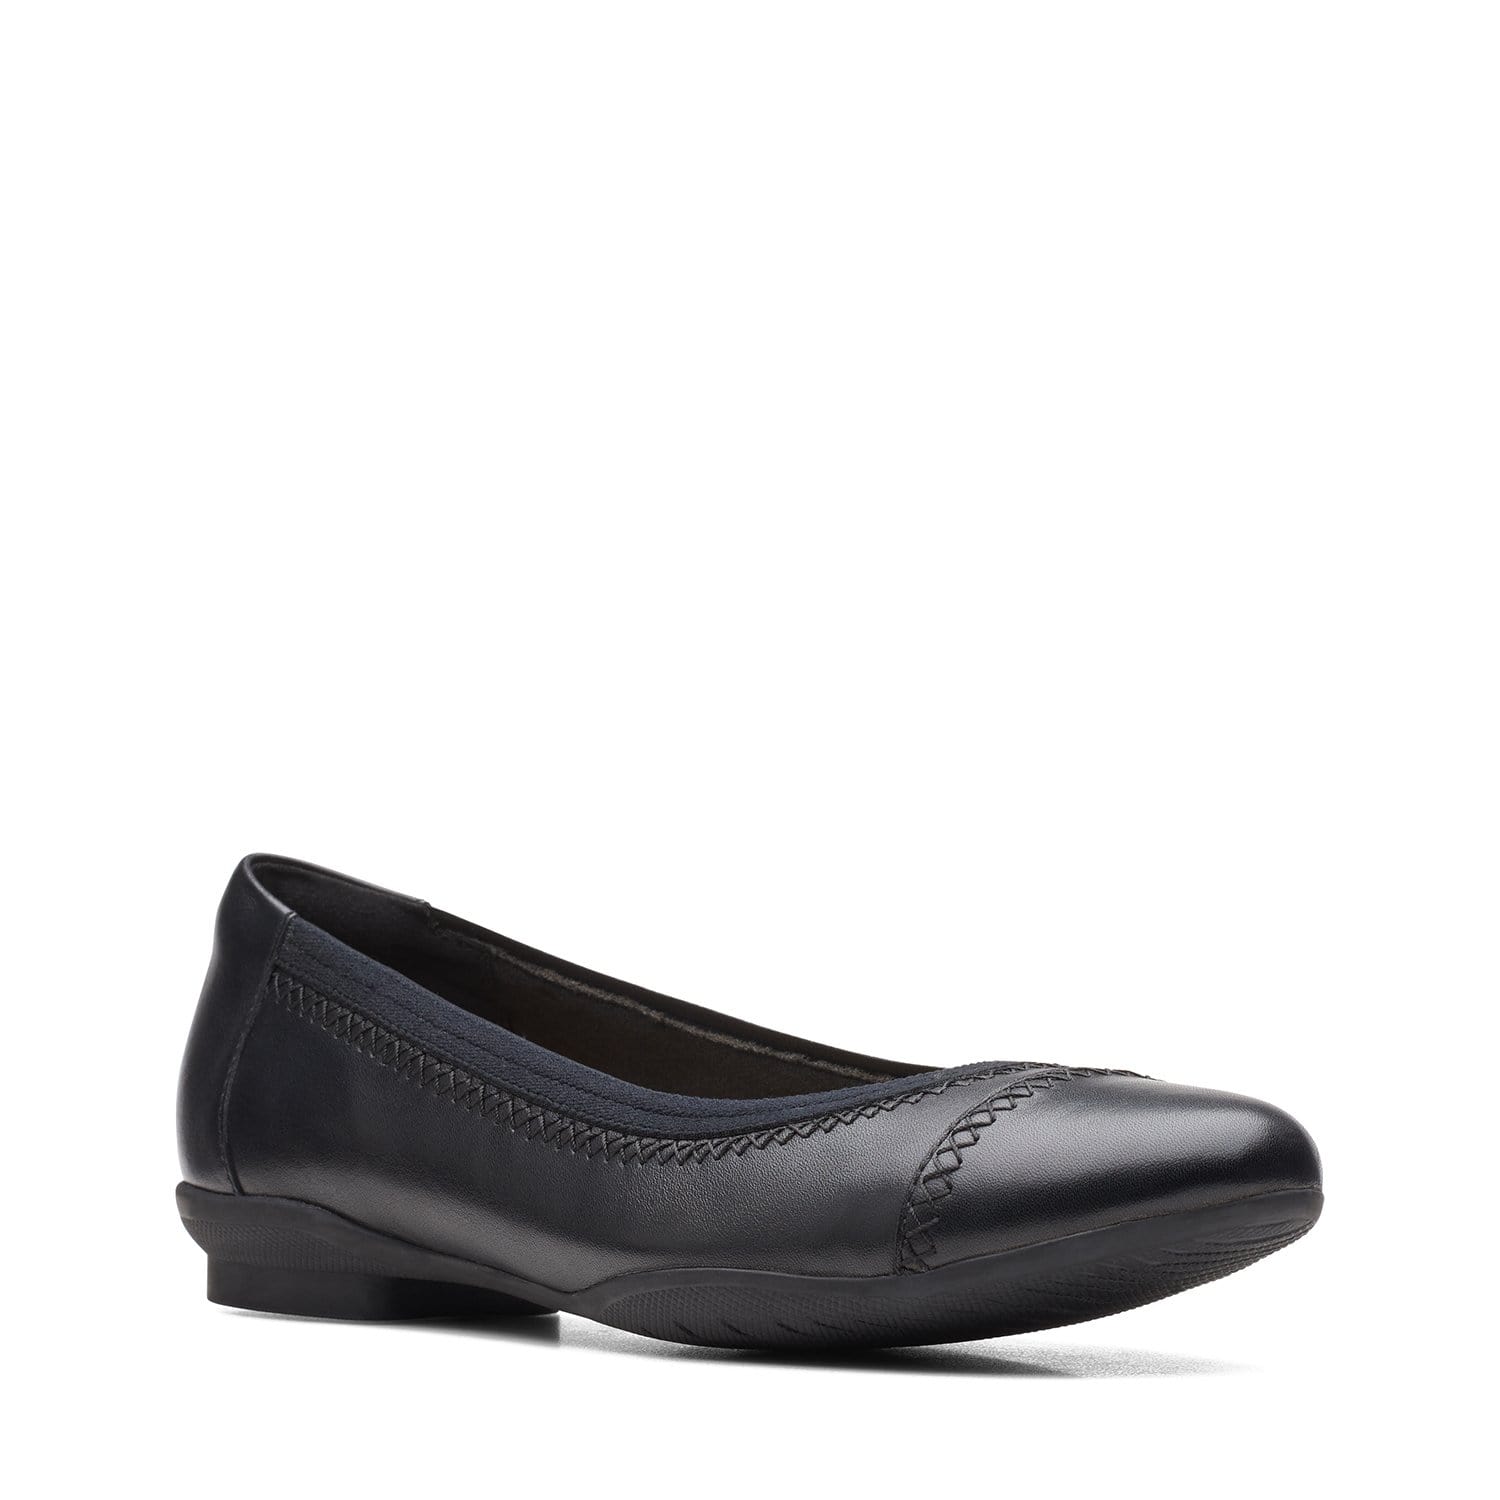 Clarks Sara Bay - Shoes - Black Leather - 261634014 - D Width (Standard Fit)